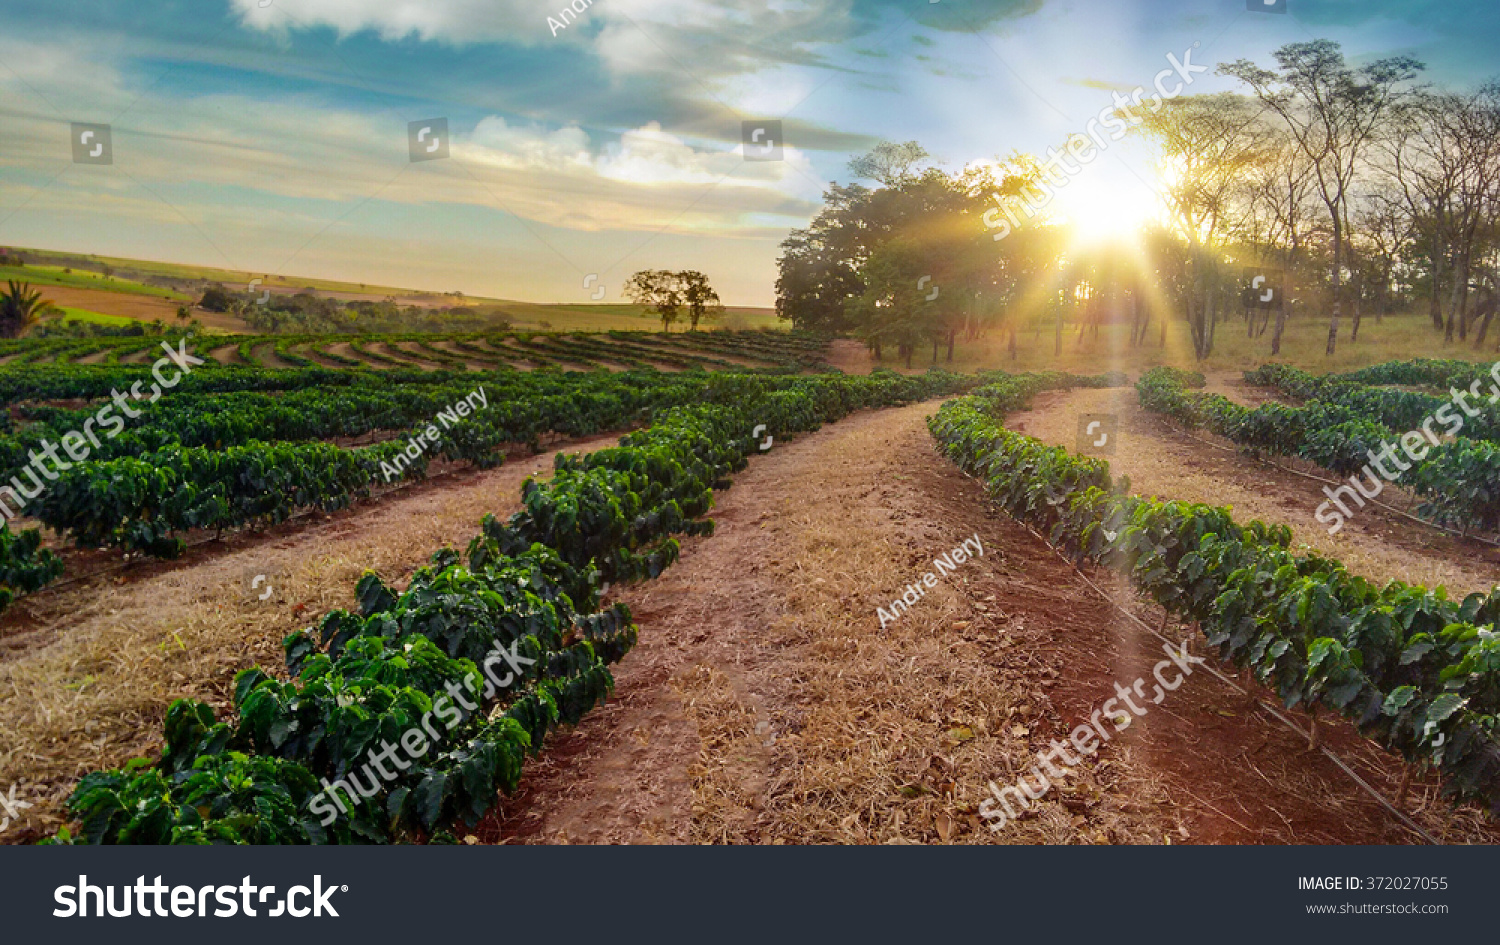 Plantation - Sundown on the coffee plantation landscape #372027055